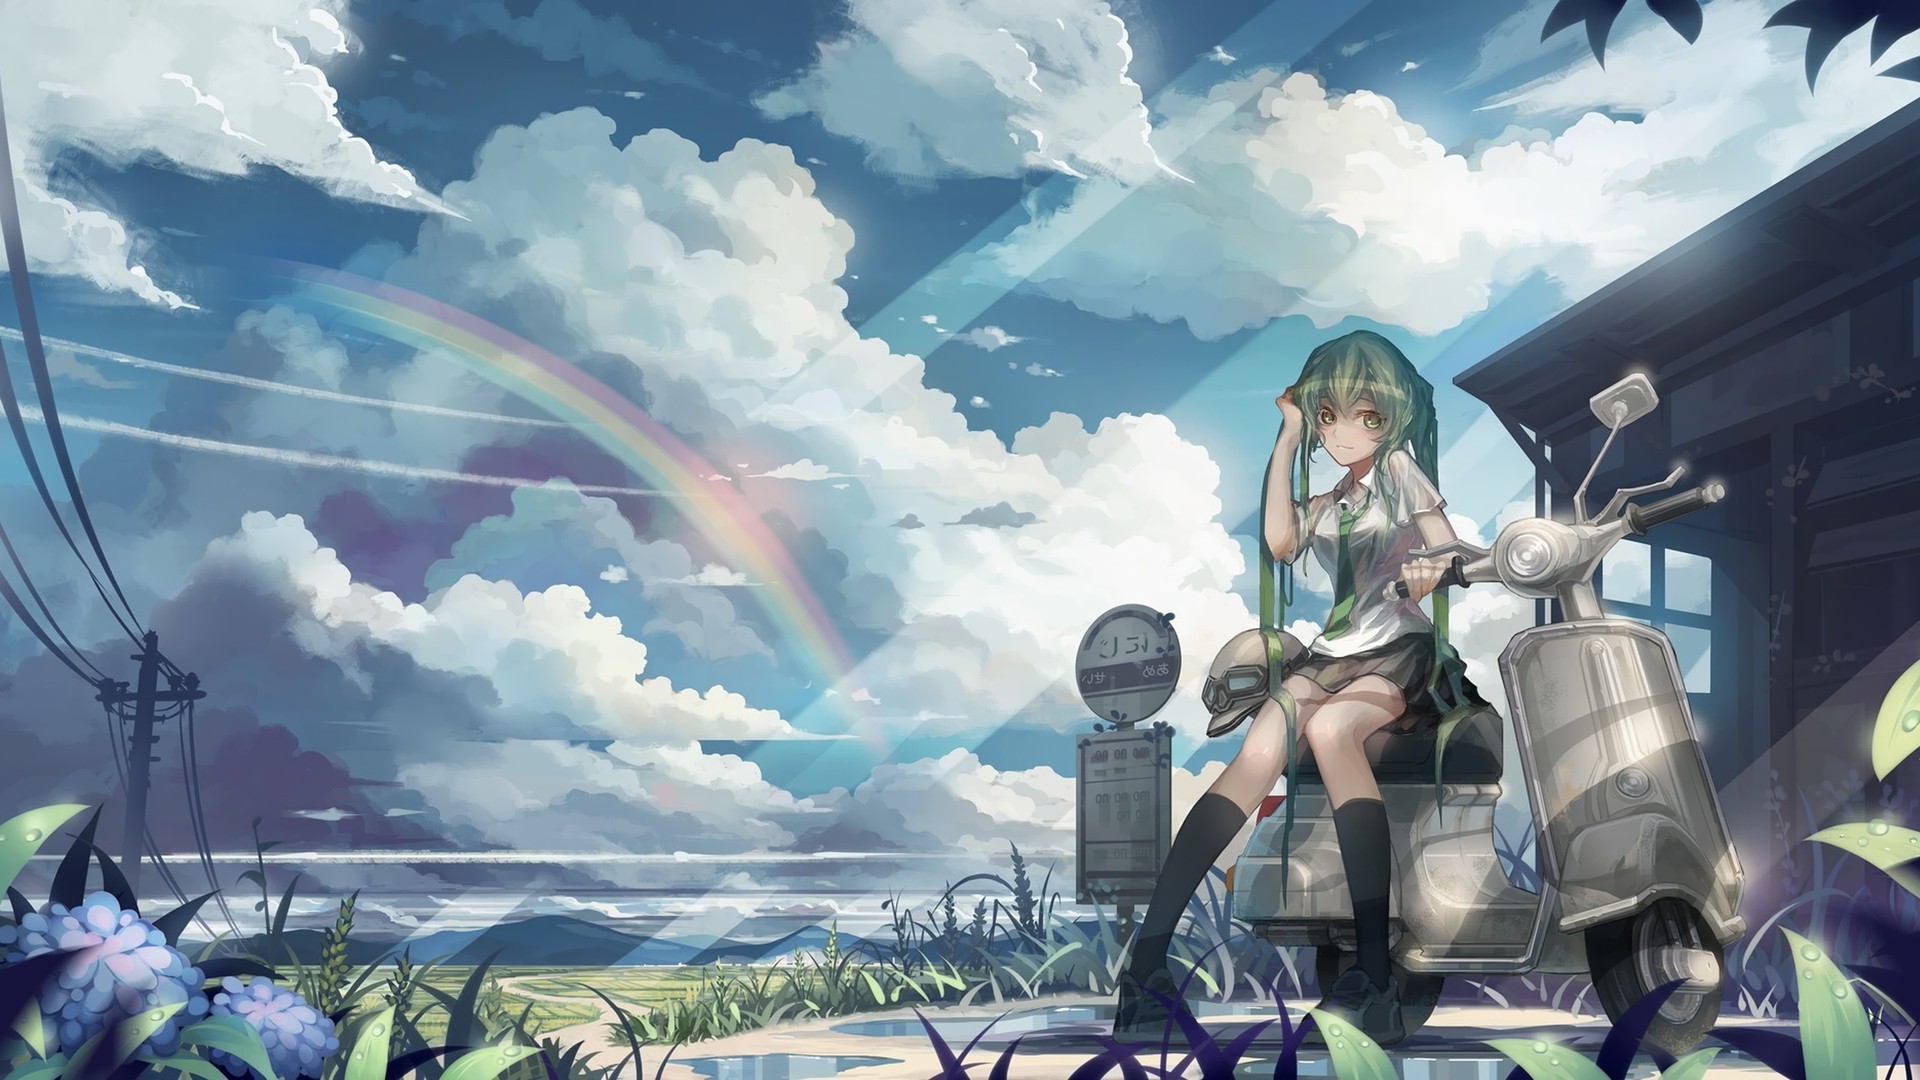 rainbows, Clouds, Sky, Green Hair, Uniform, Landscape, Power Lines, Sun Rays Wallpaper